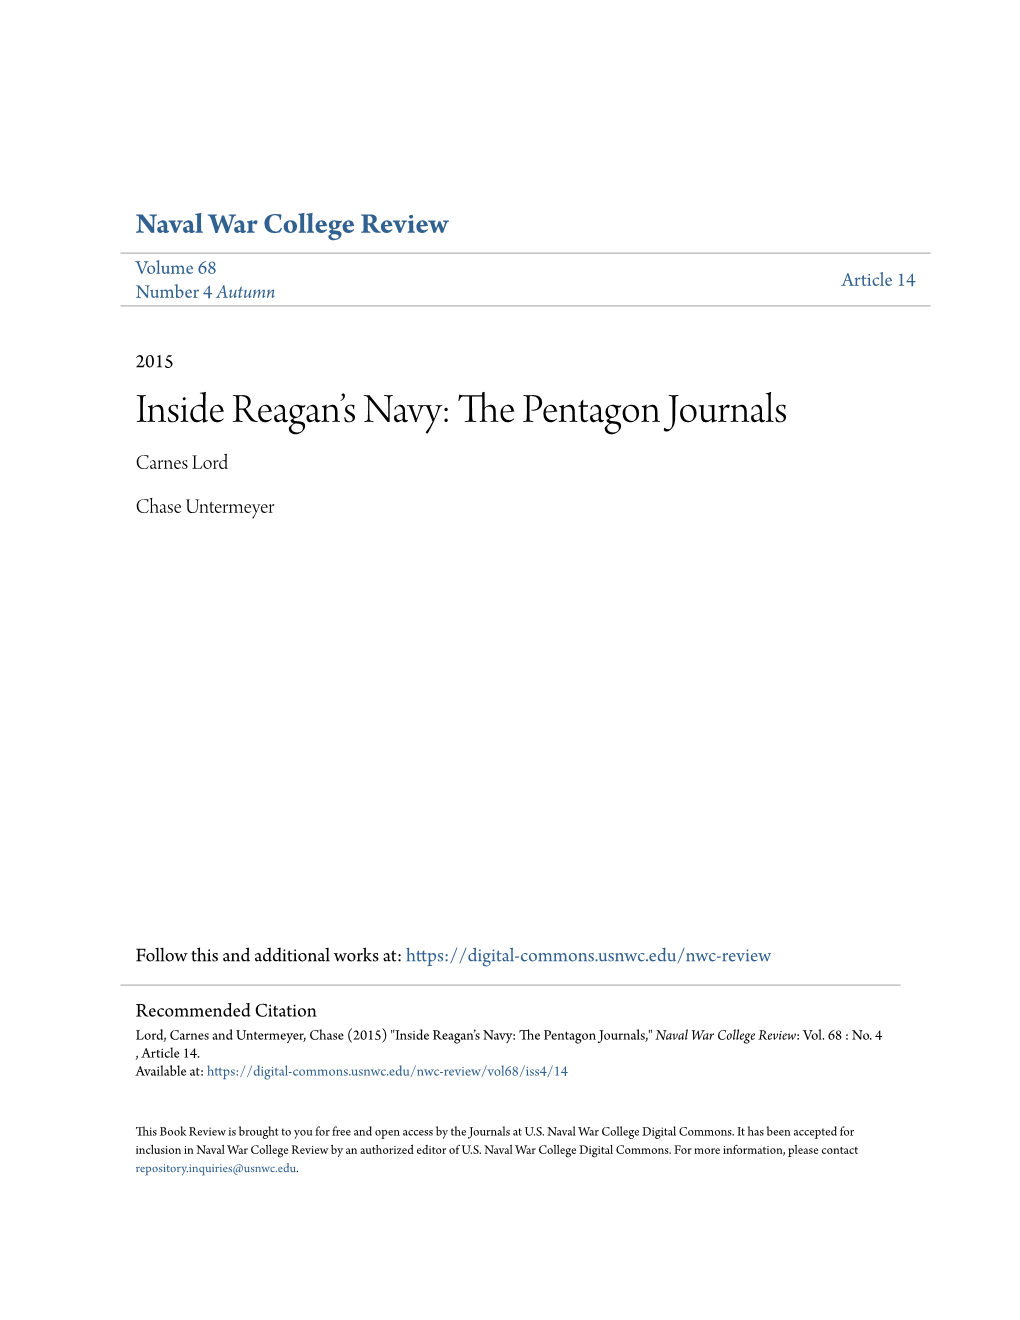 Inside Reagan's Navy: the Pentagon Journals